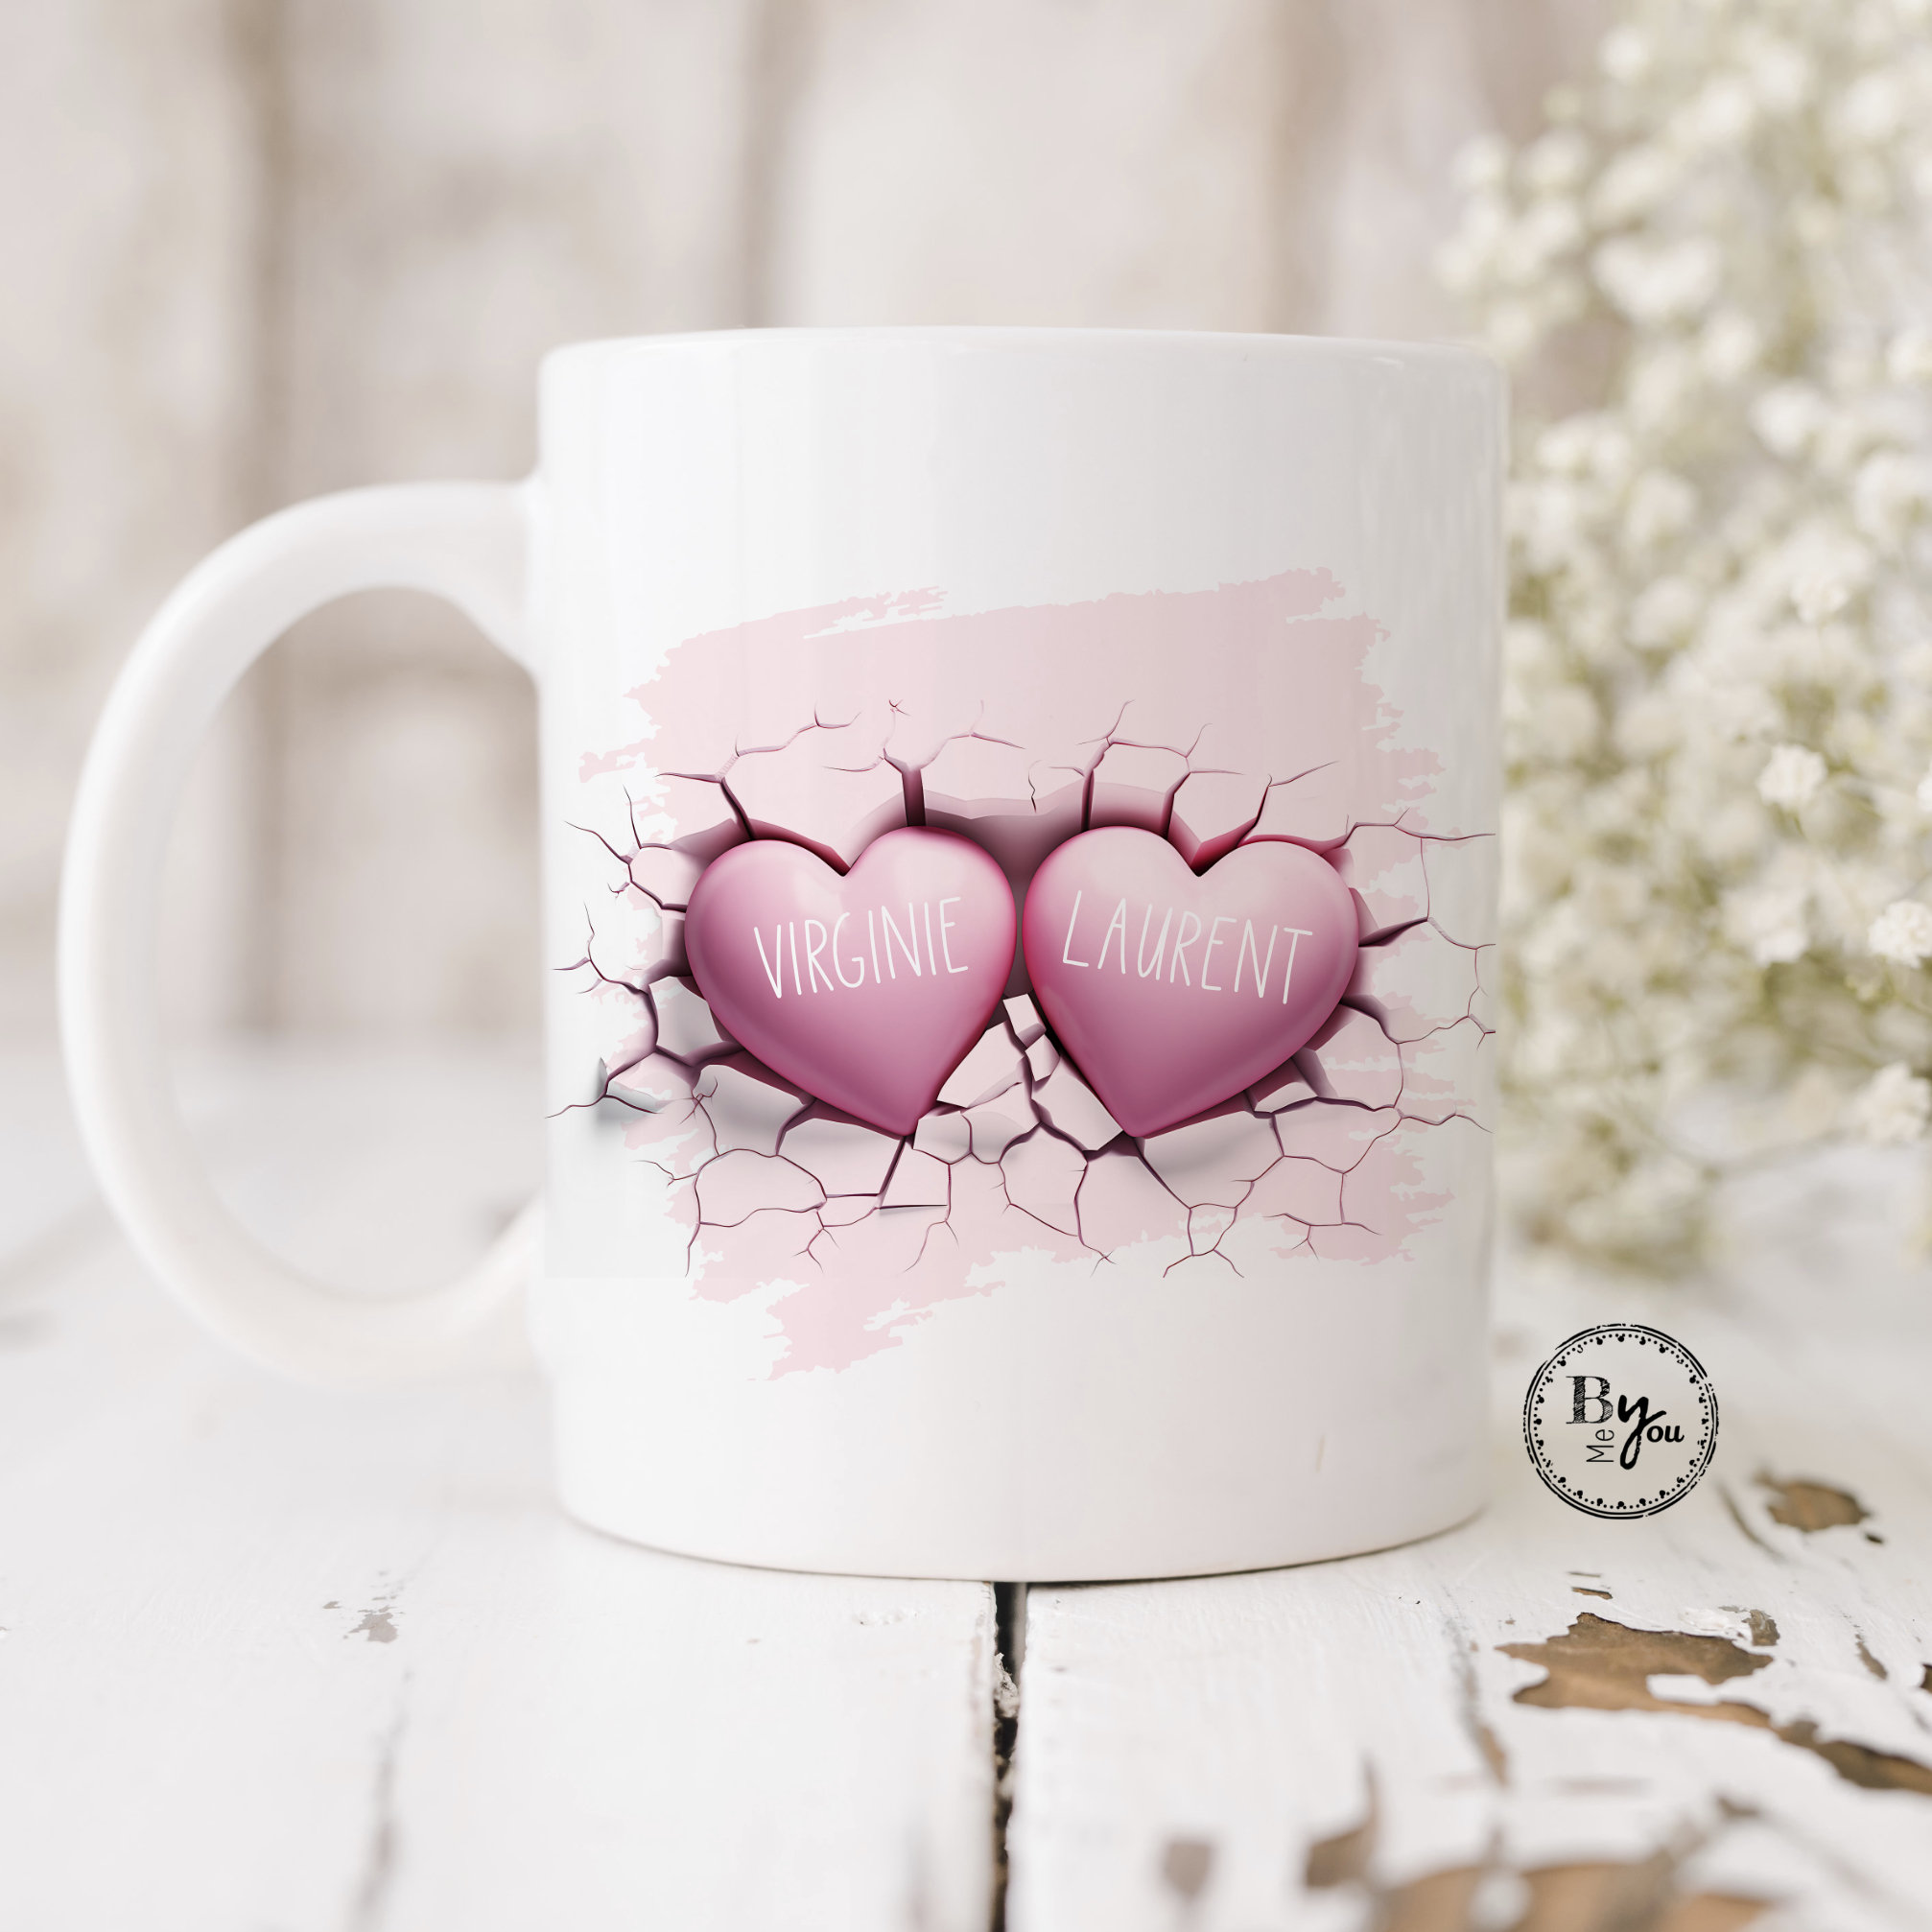 Cadeau Saint-valentin : Mug à offrir Je t'aime - 9,90 €